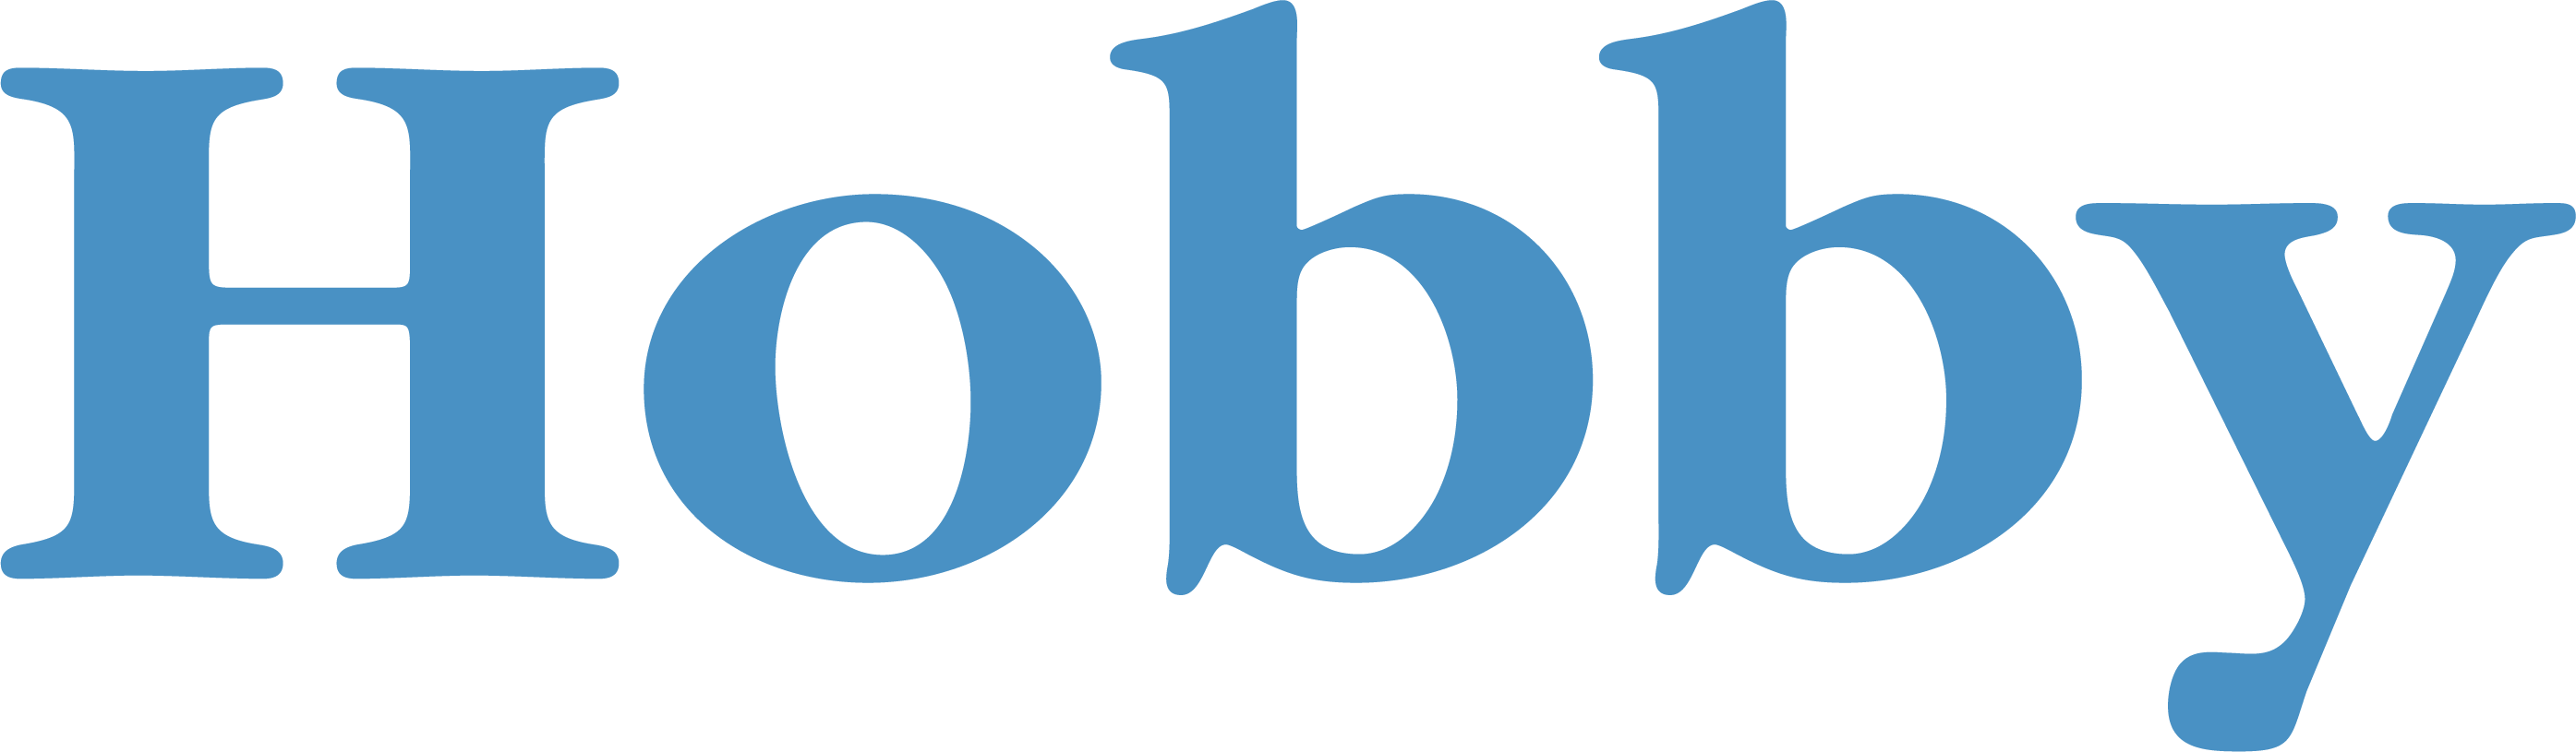 Hobby_Logo_Claim_Blau_CMYK_DE_ohneClaim